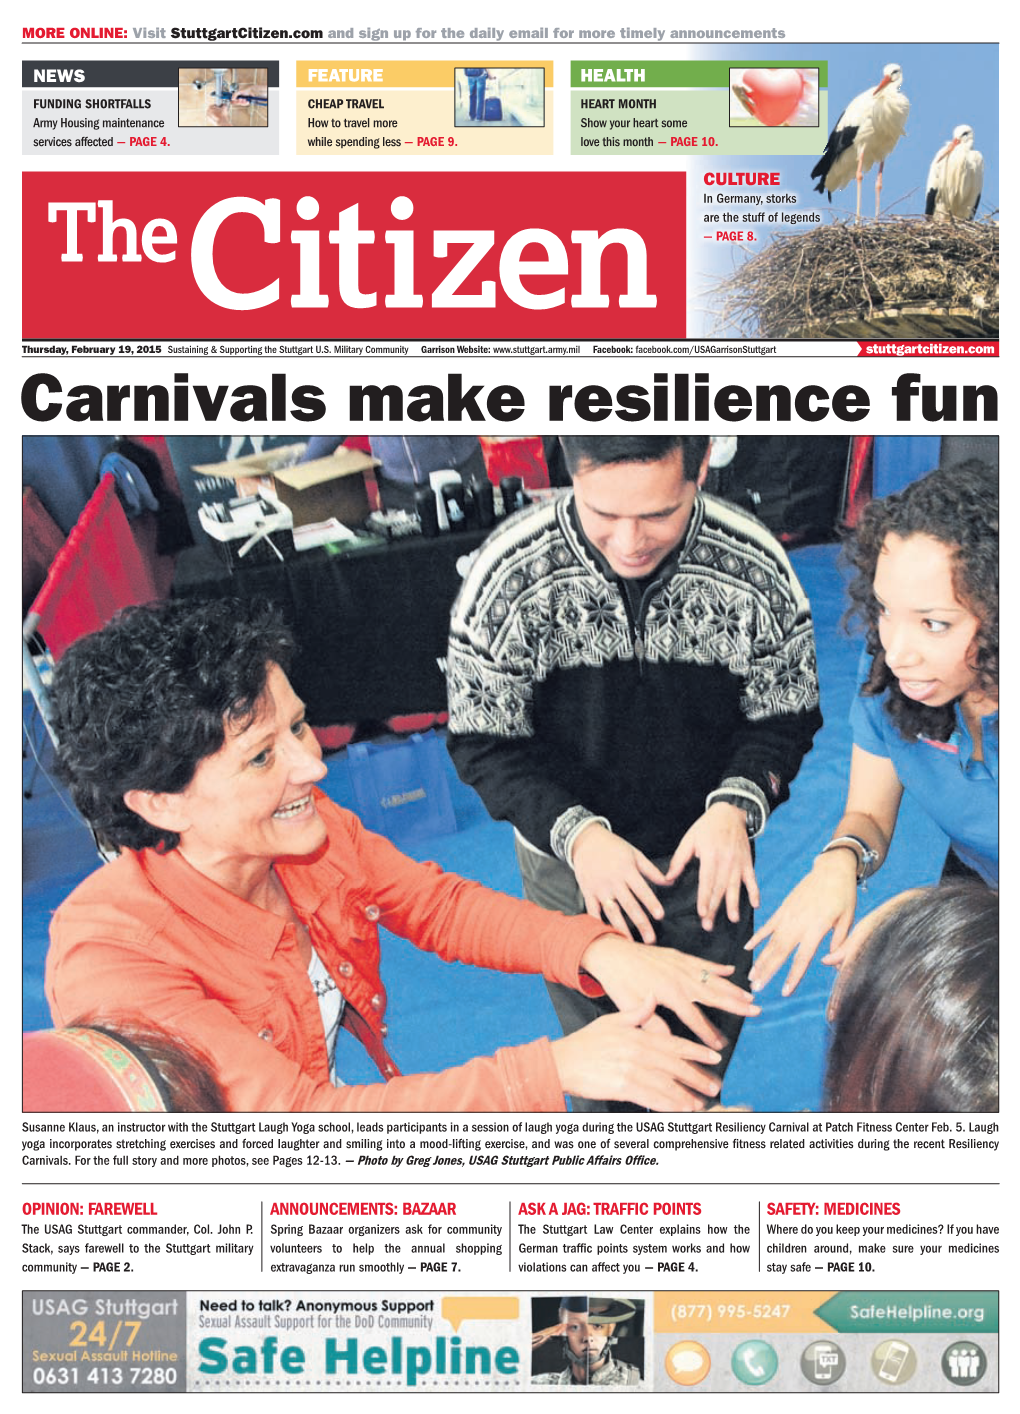 Carnivals Make Resilience Fun